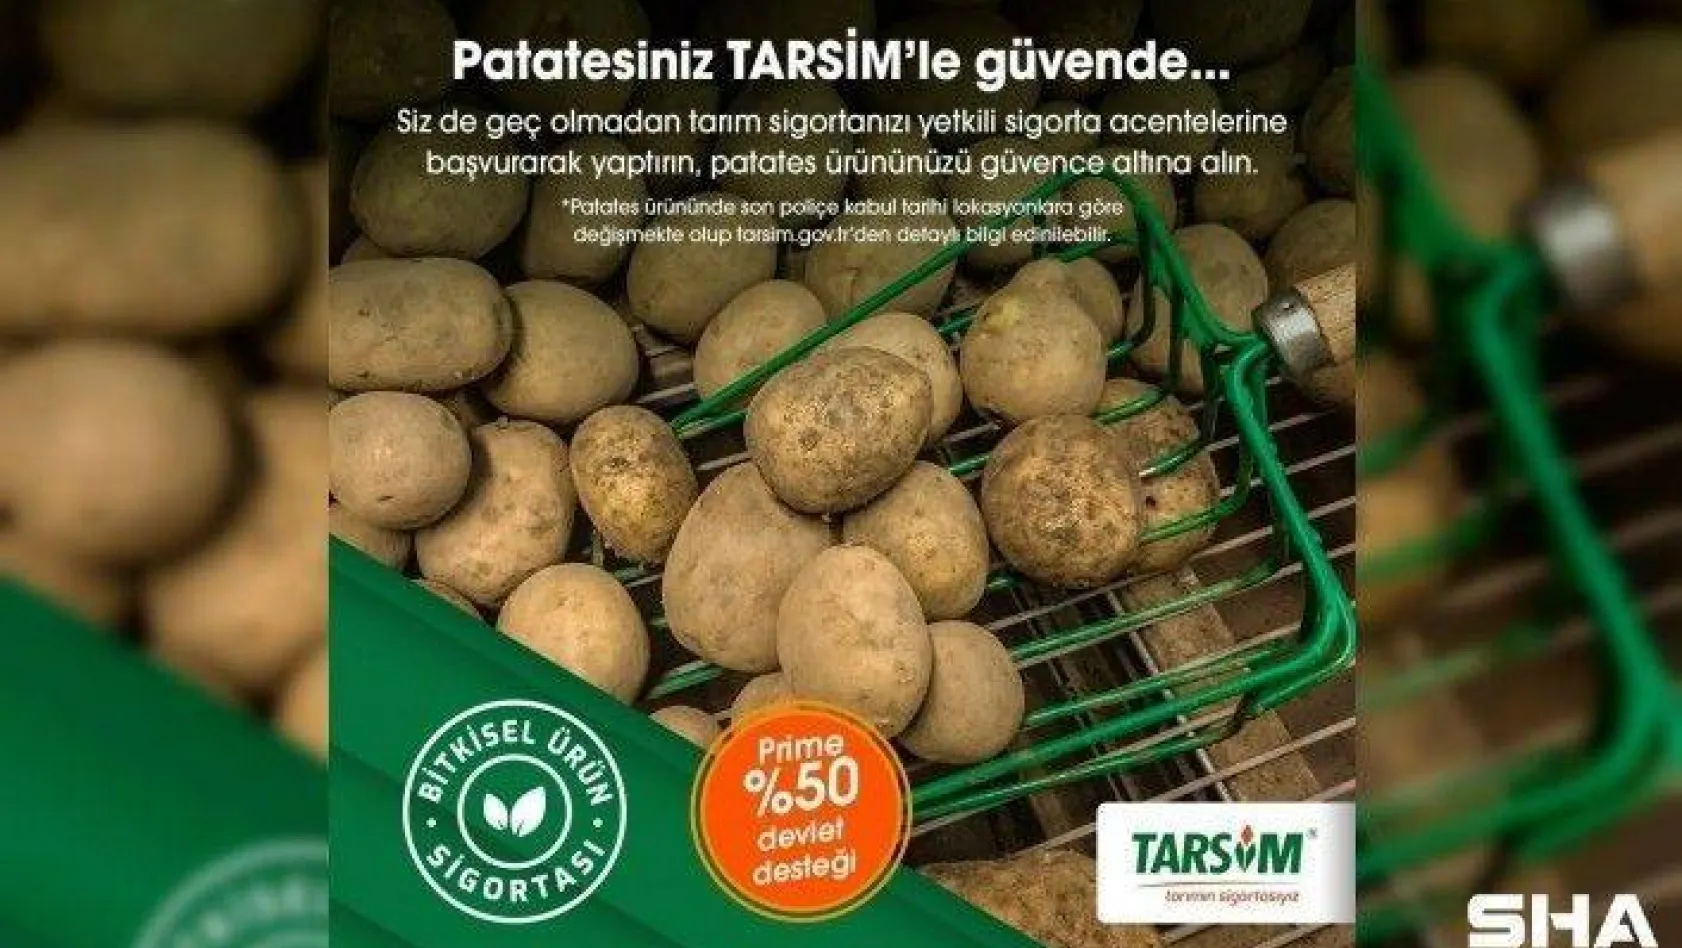 TARSİM: 'Patates ürününüz güvende'